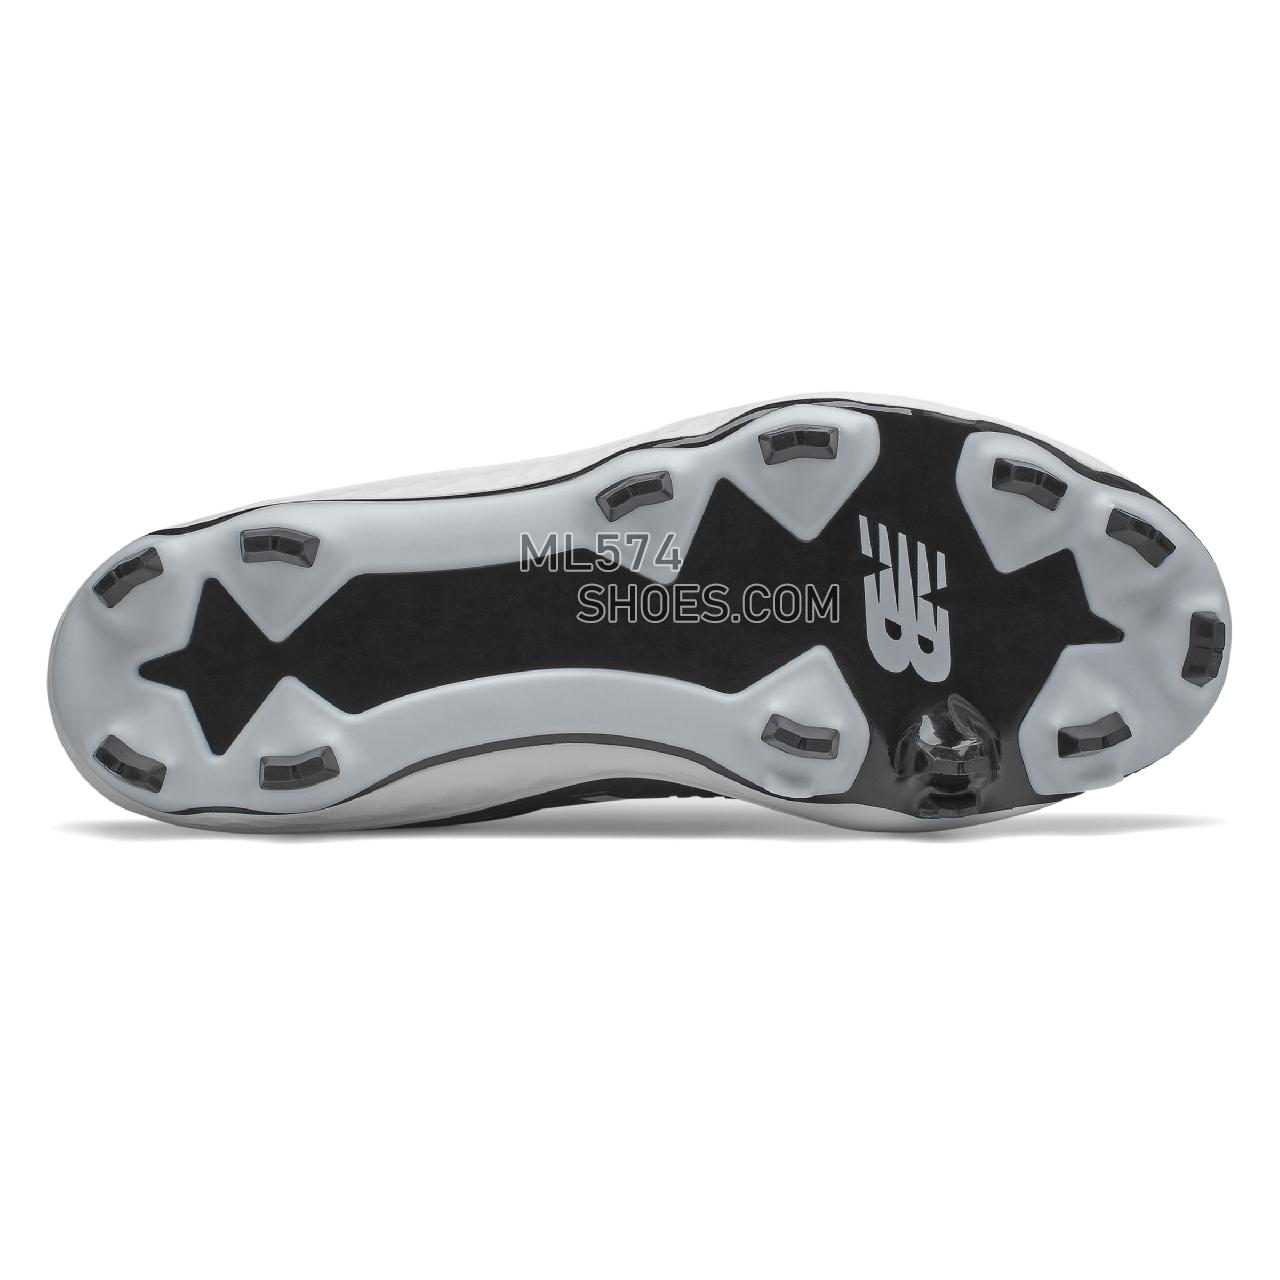 New Balance Fresh Foam 3000v5 Mid-Cut TPU - Men's Mid-Cut Baseball Cleats - Black with White - PM3000K5